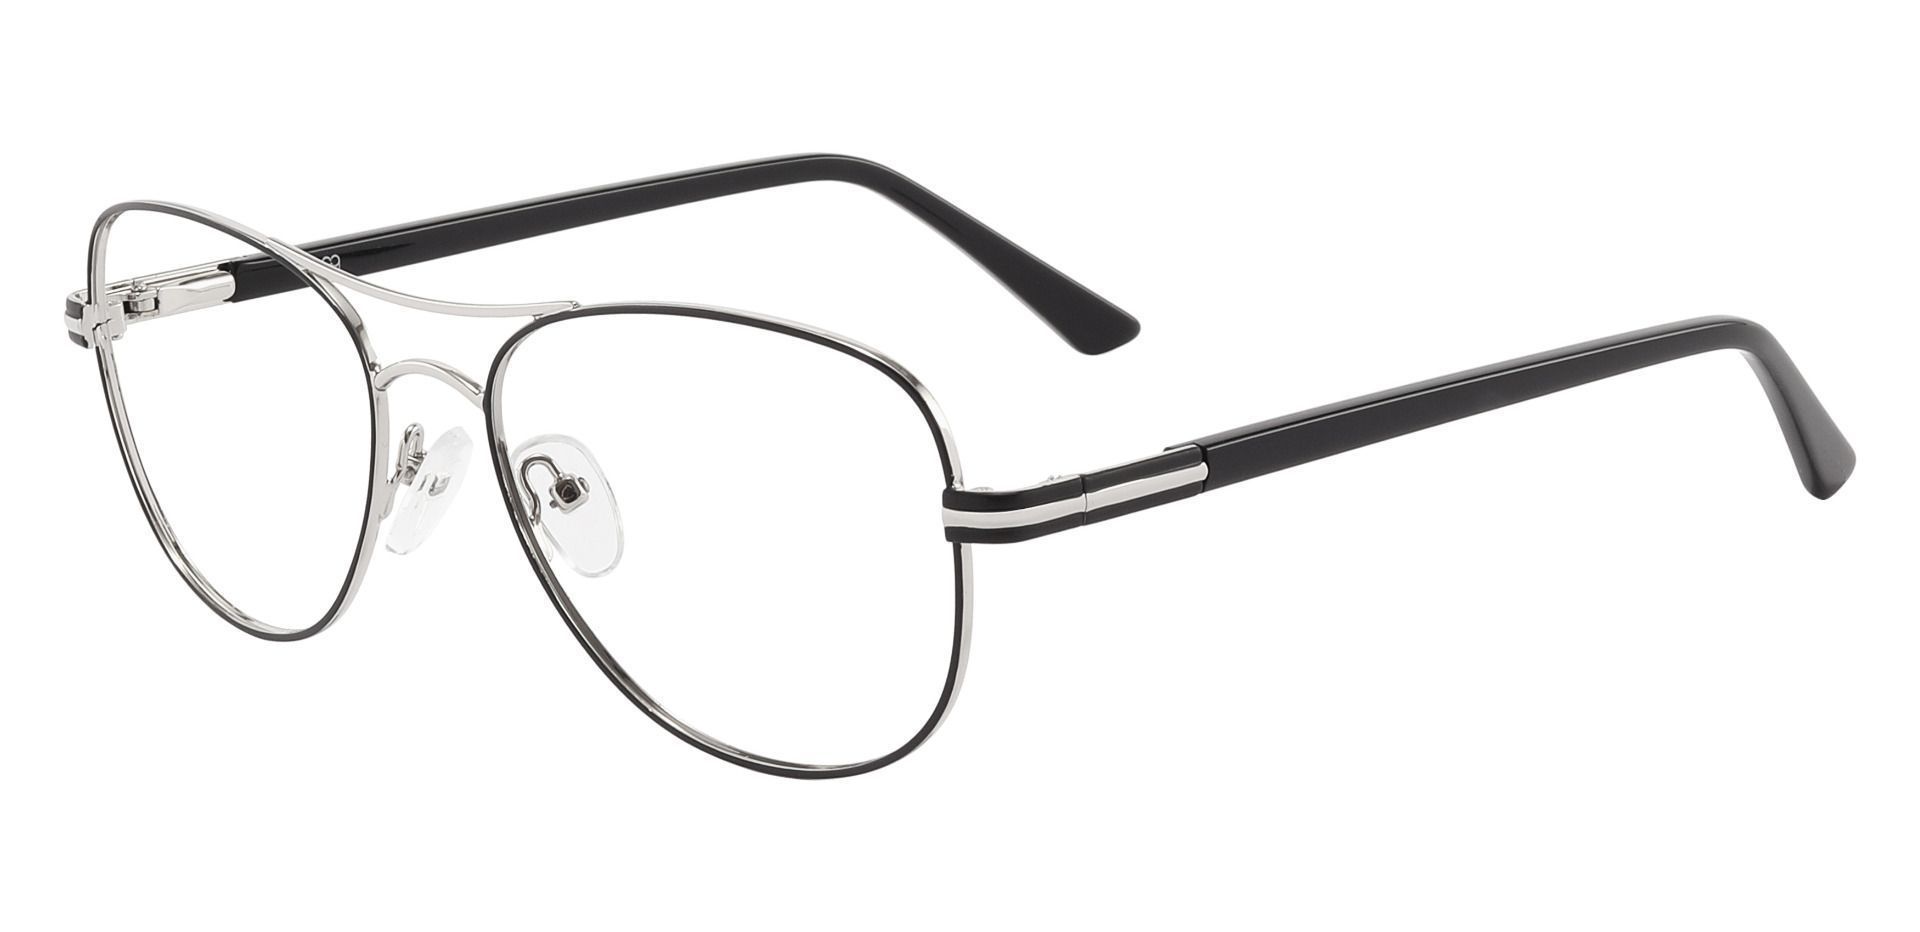 Reeves Aviator Eyeglasses Frame - Silver